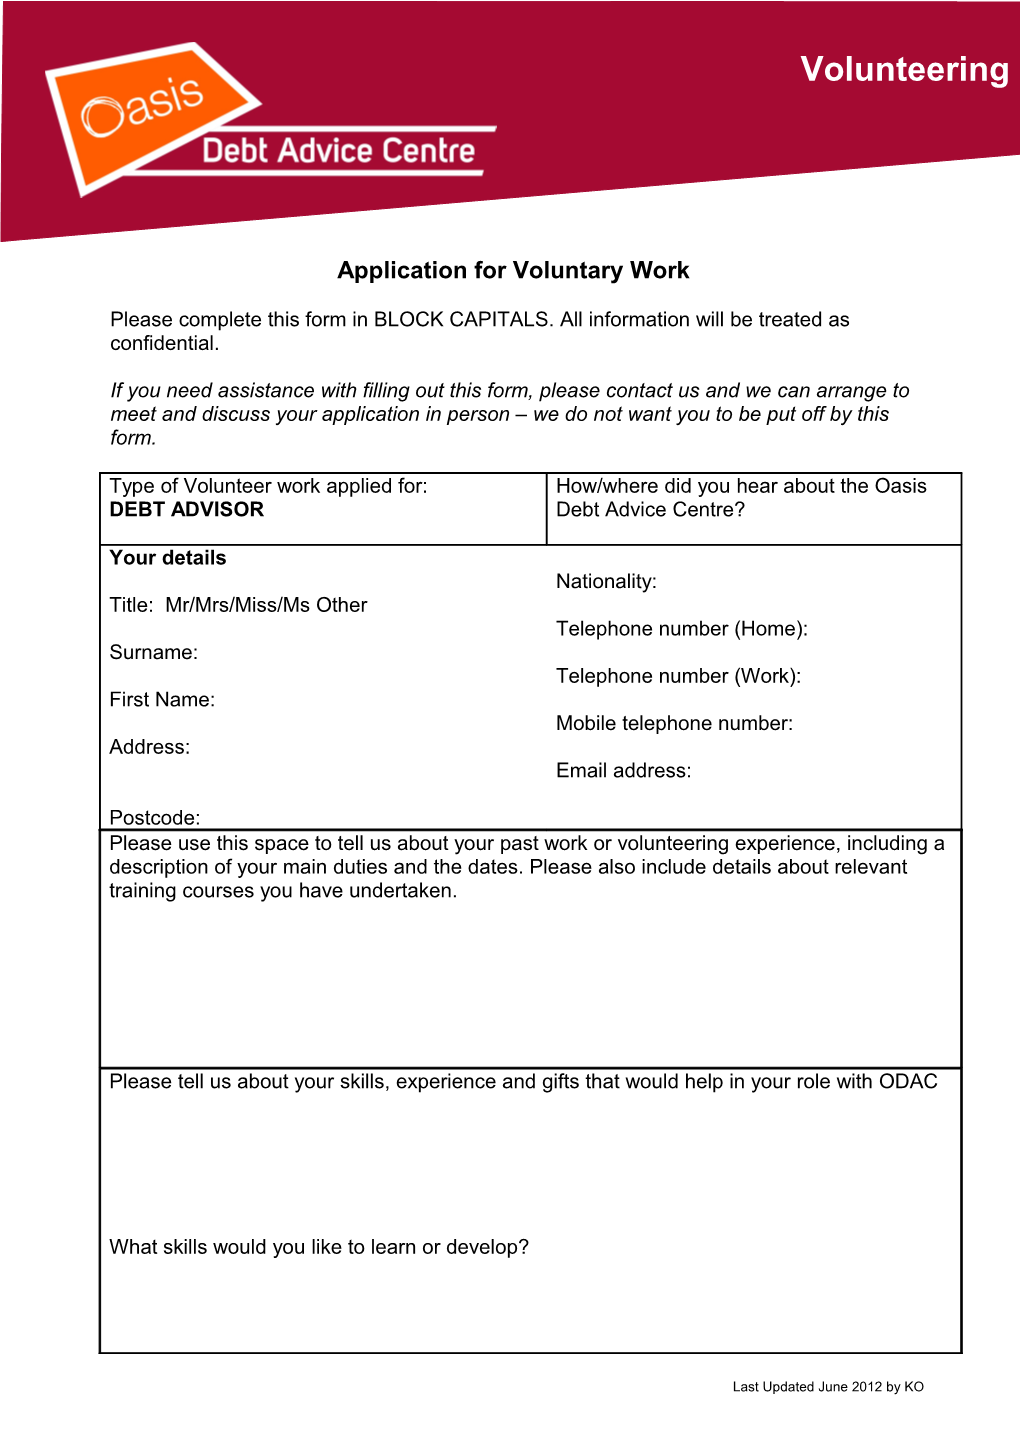 Application for Voluntary Work